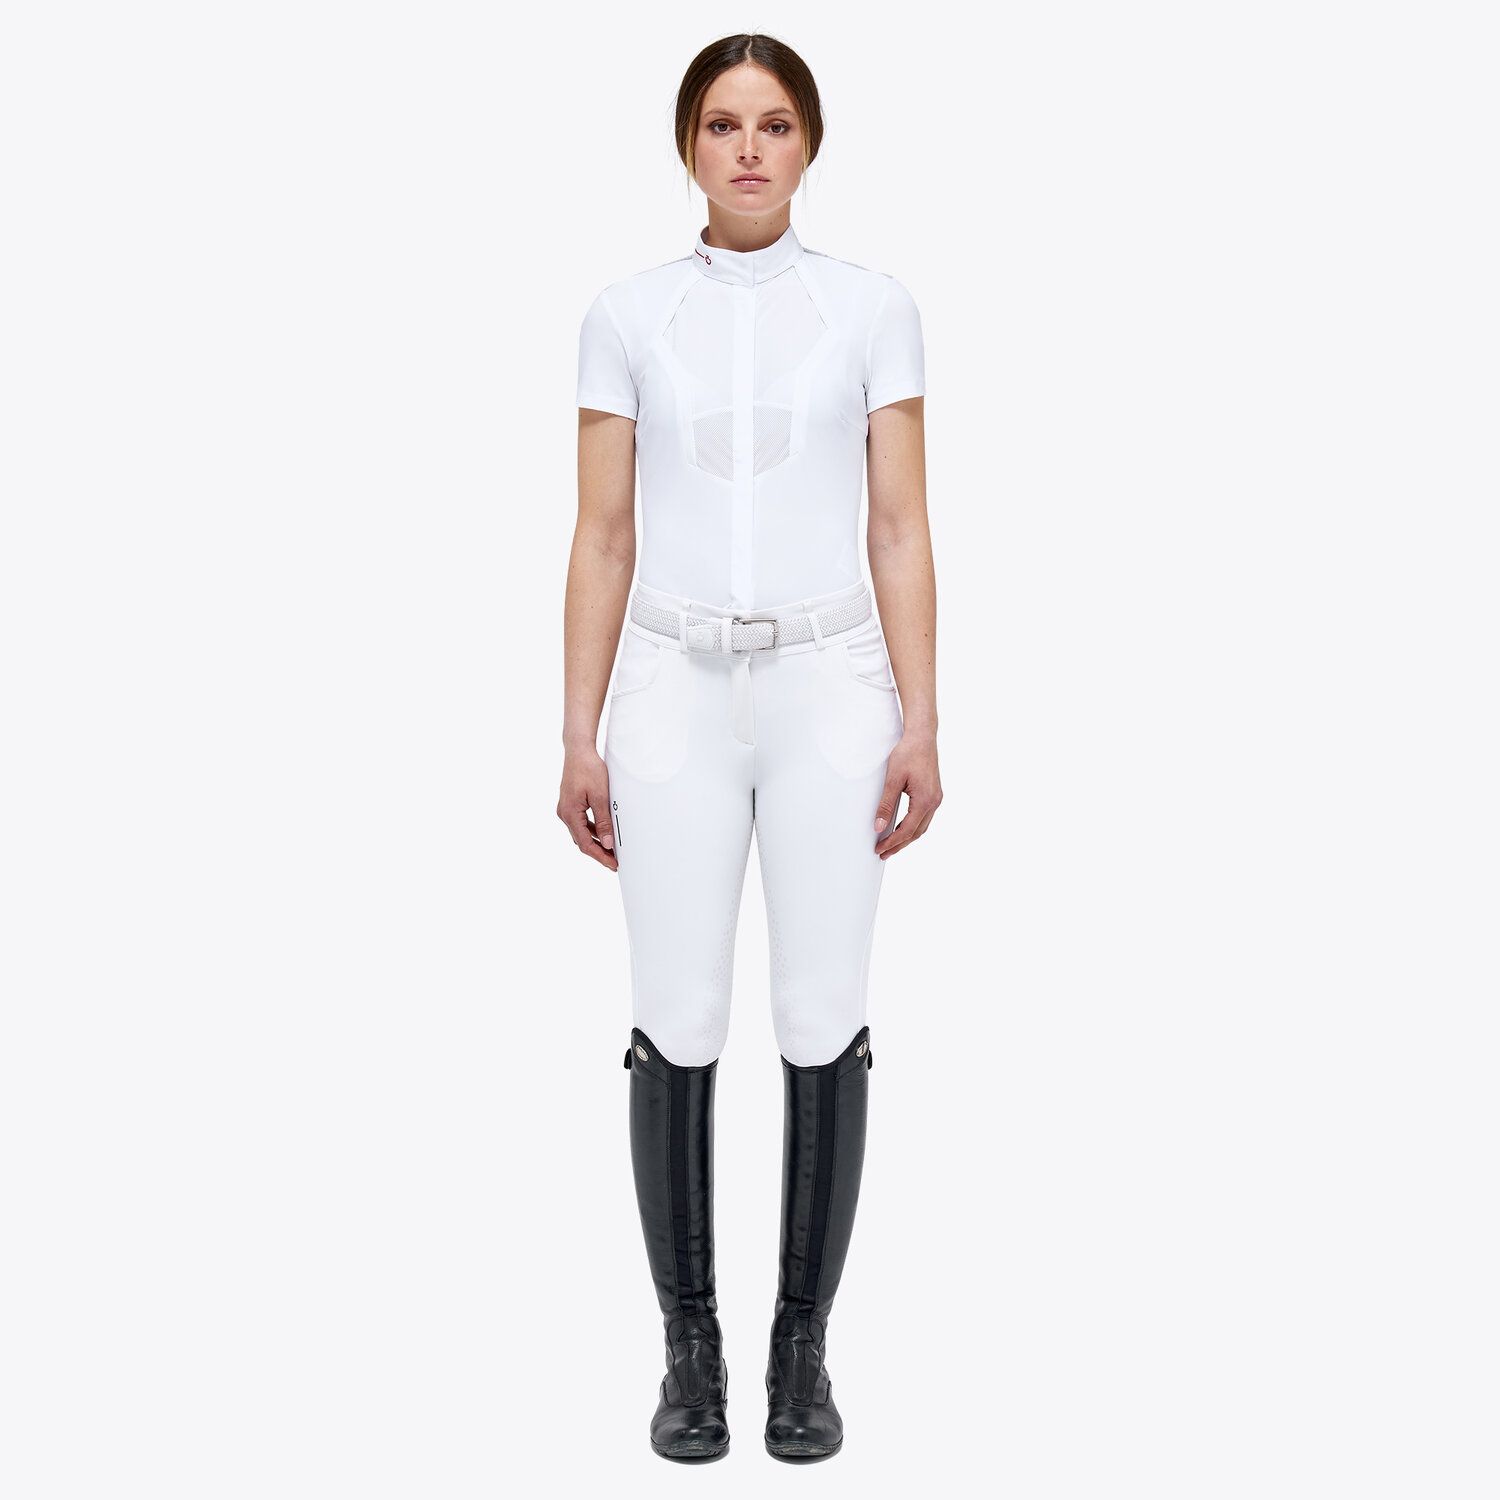 Cavalleria Toscana Women’s technical knit shirt WHITE-1